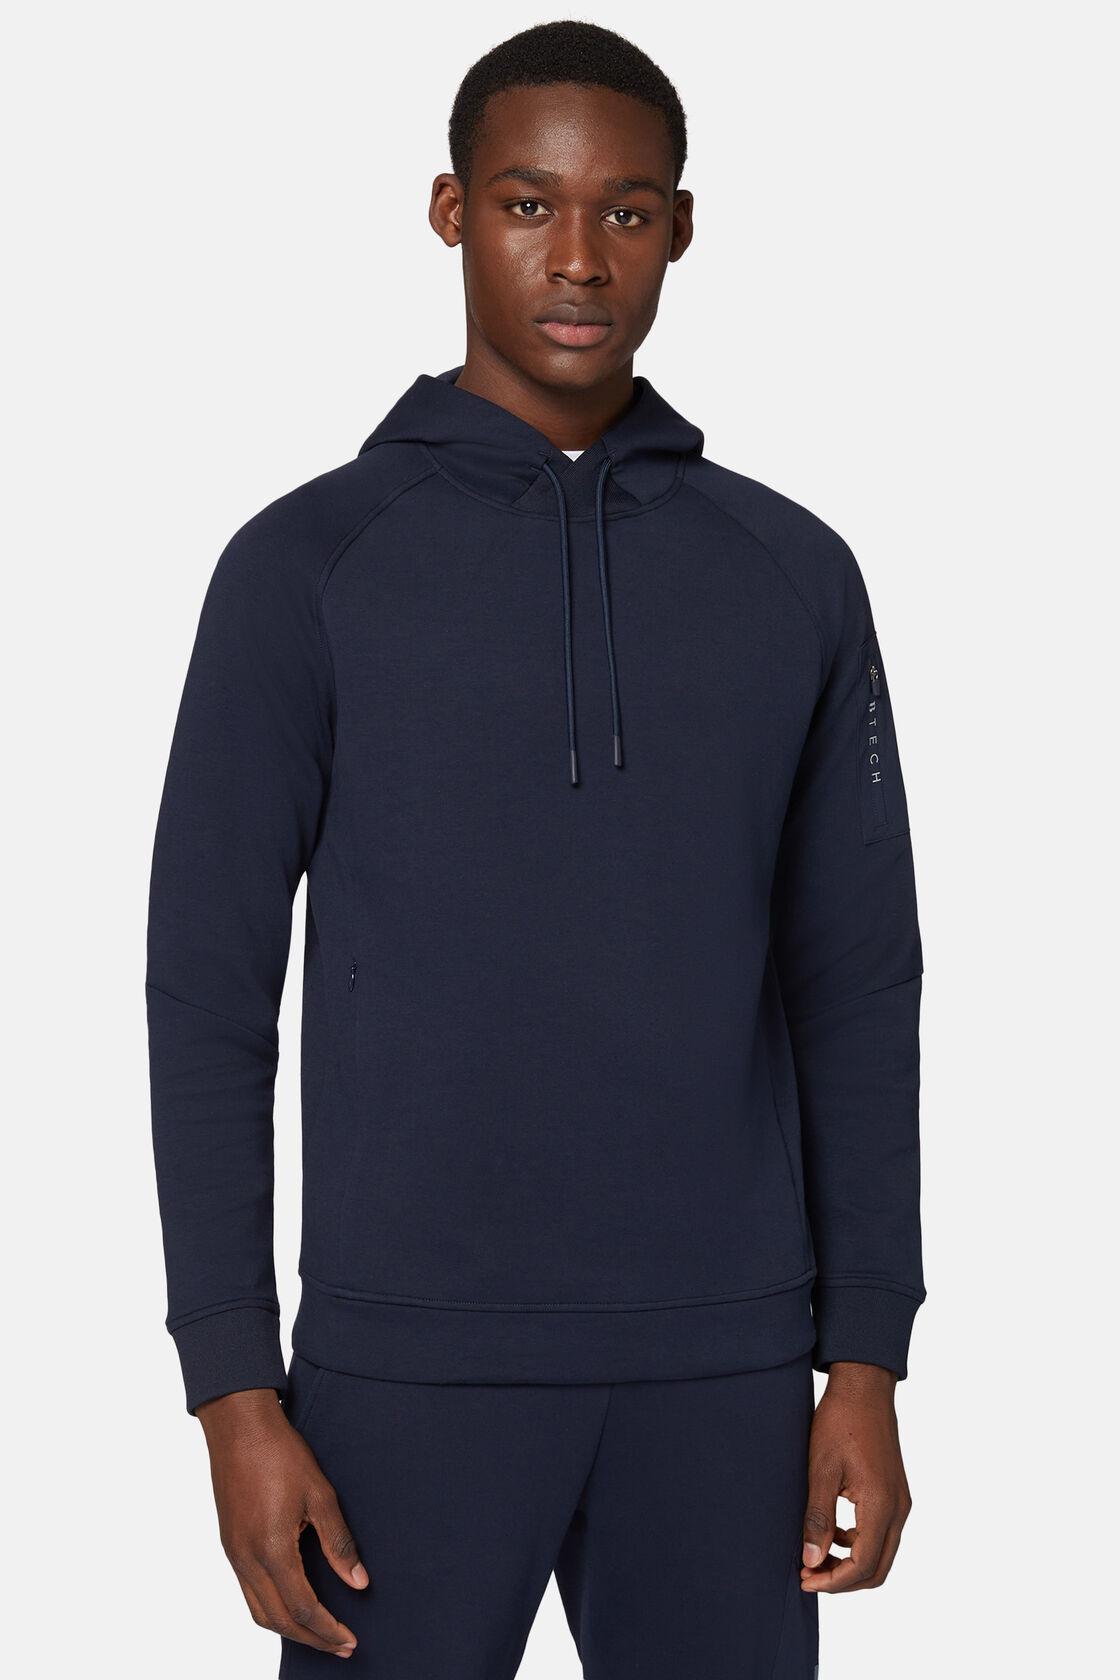 Light Recycled Scuba Hooded Sweatshirt, Navy blue, hi-res